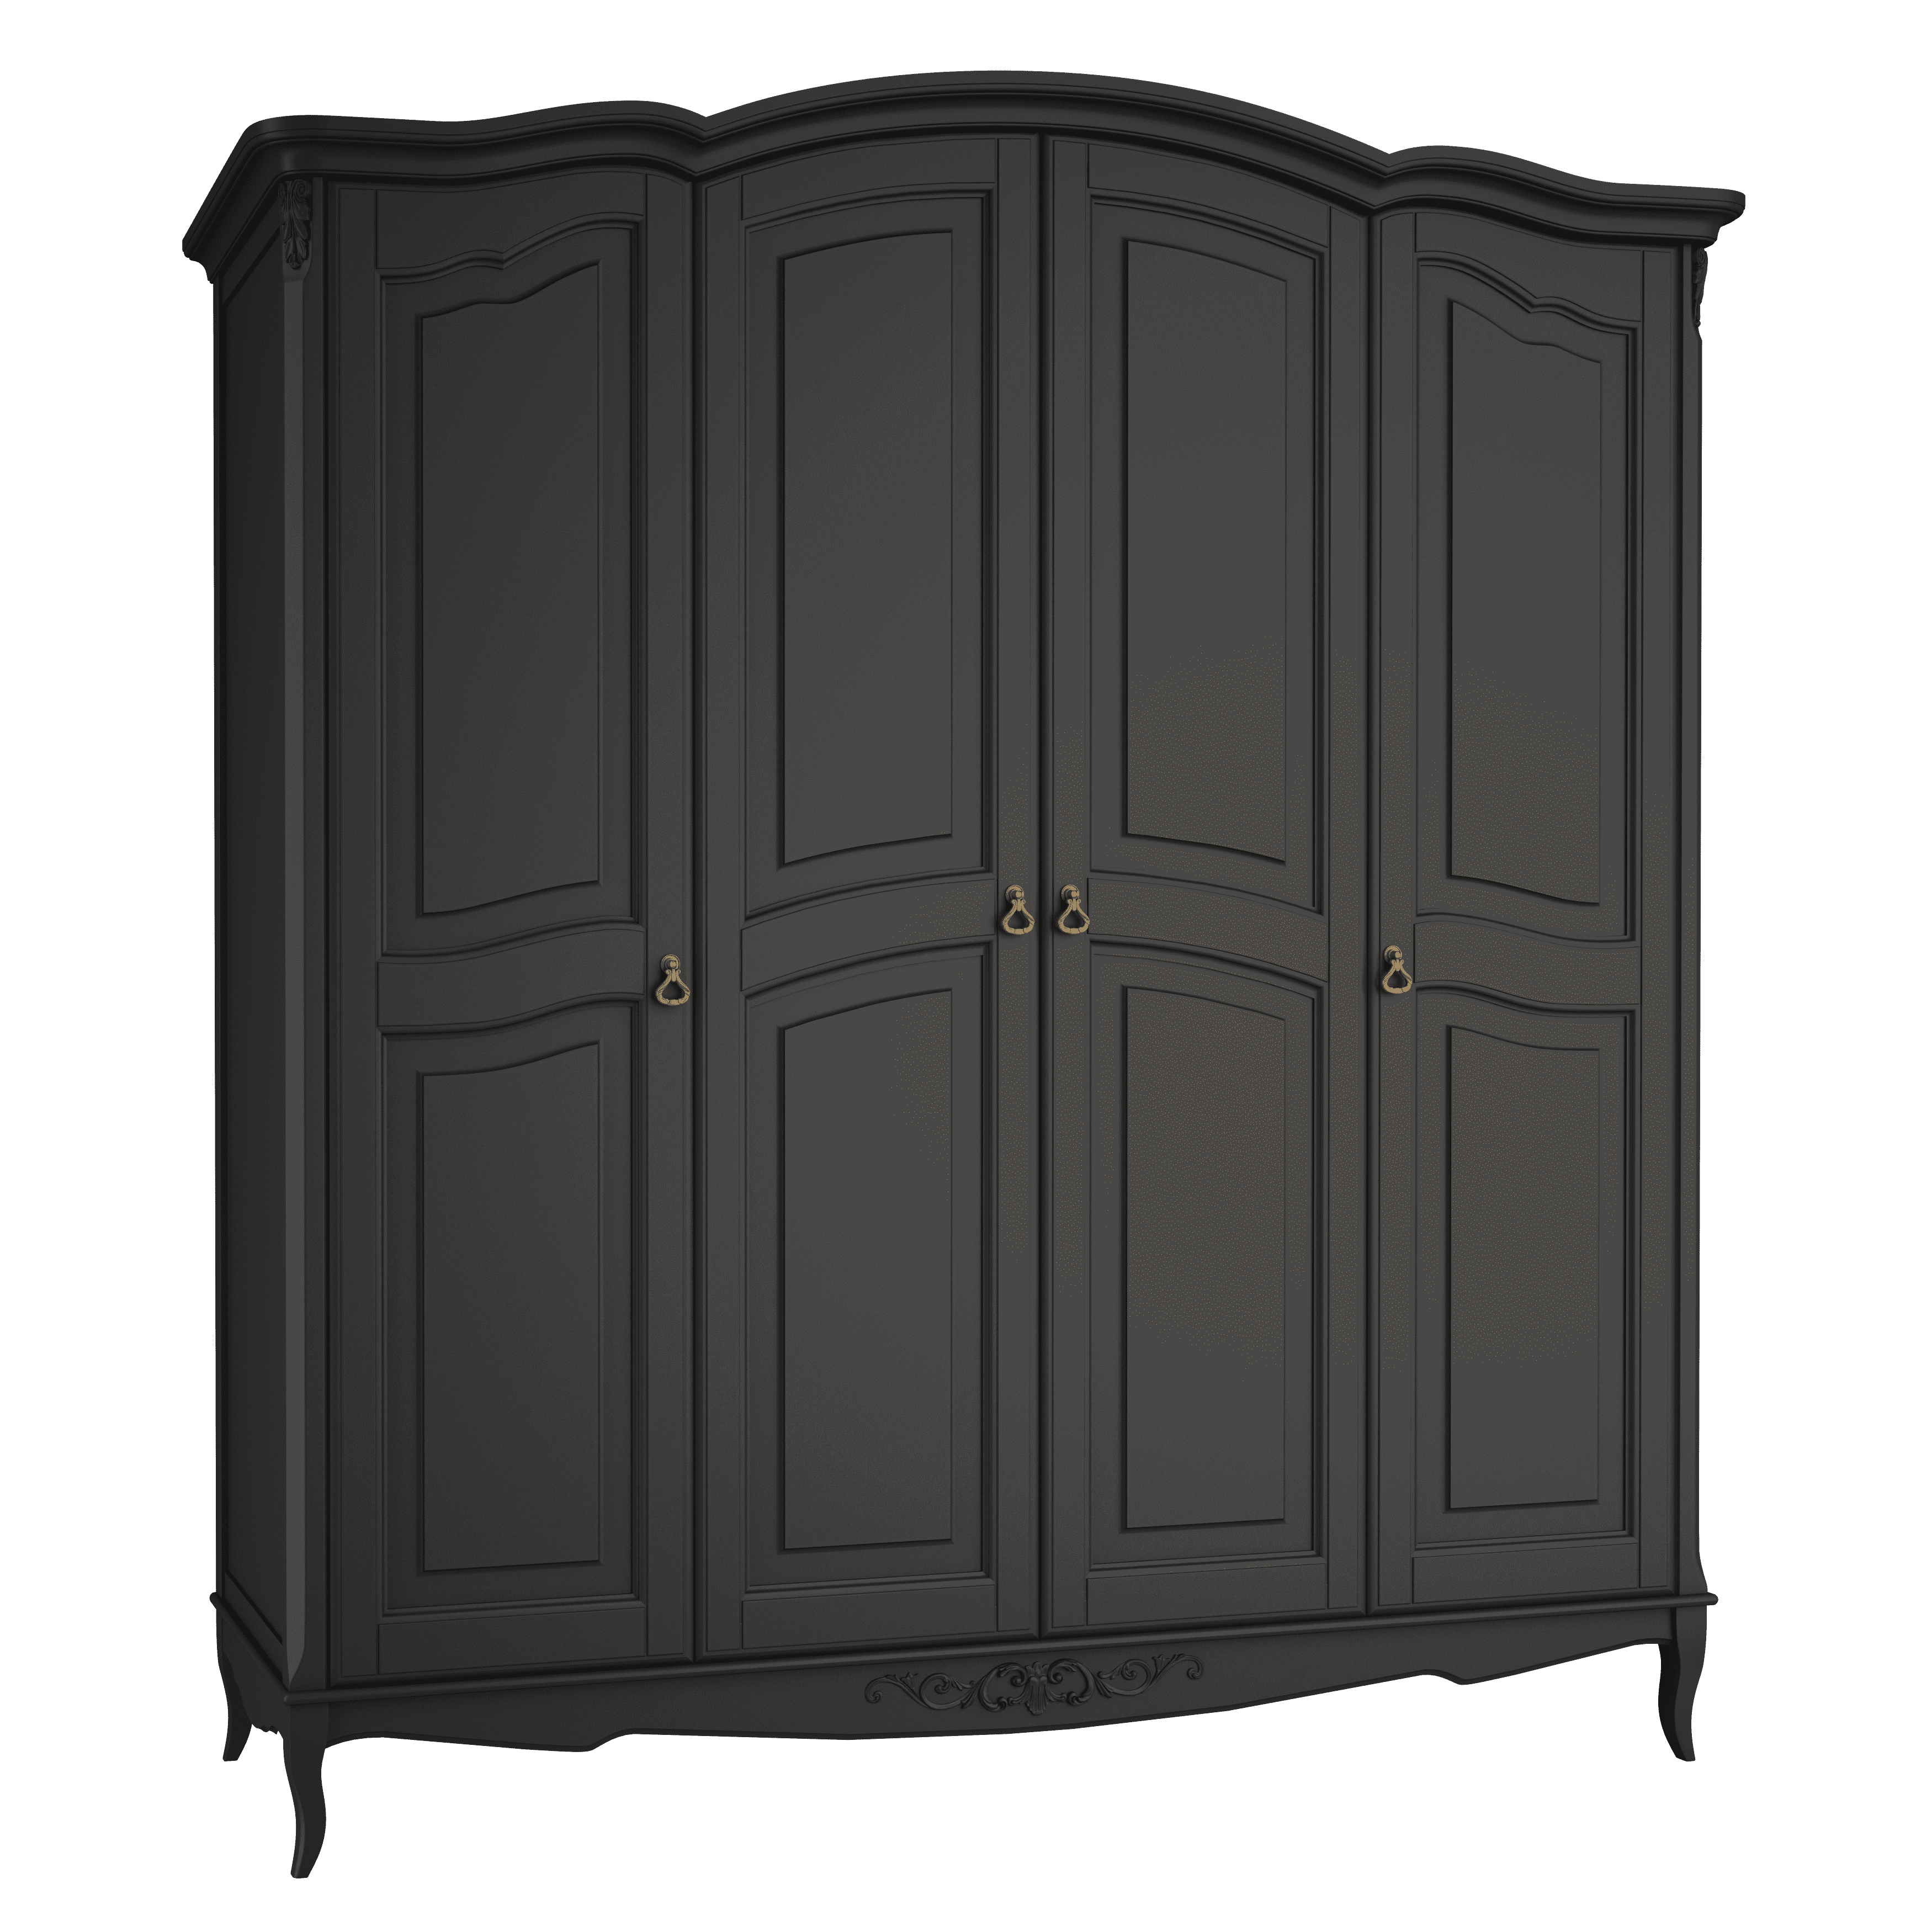 Шкаф платяной Aletan Provence, 4-х дверный, цвет: черный (B804BL)B804BL